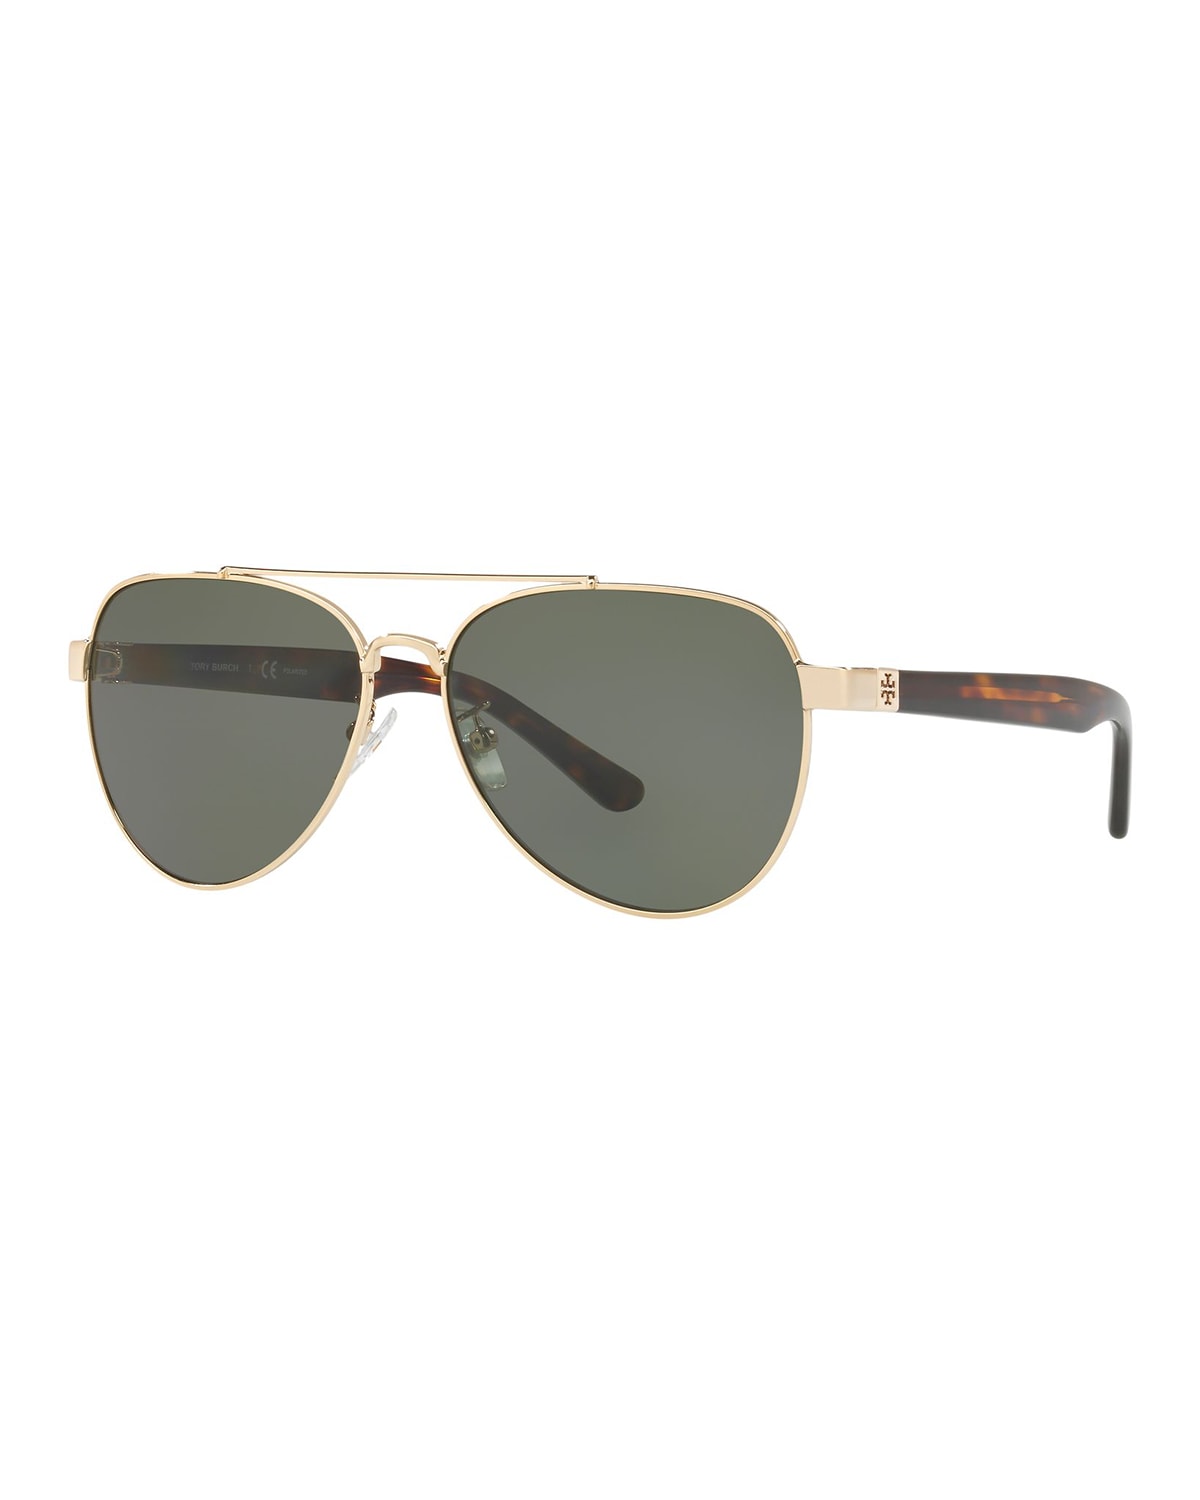 Tory Burch Polarized Metal Aviator Sunglasses In Green / Gold